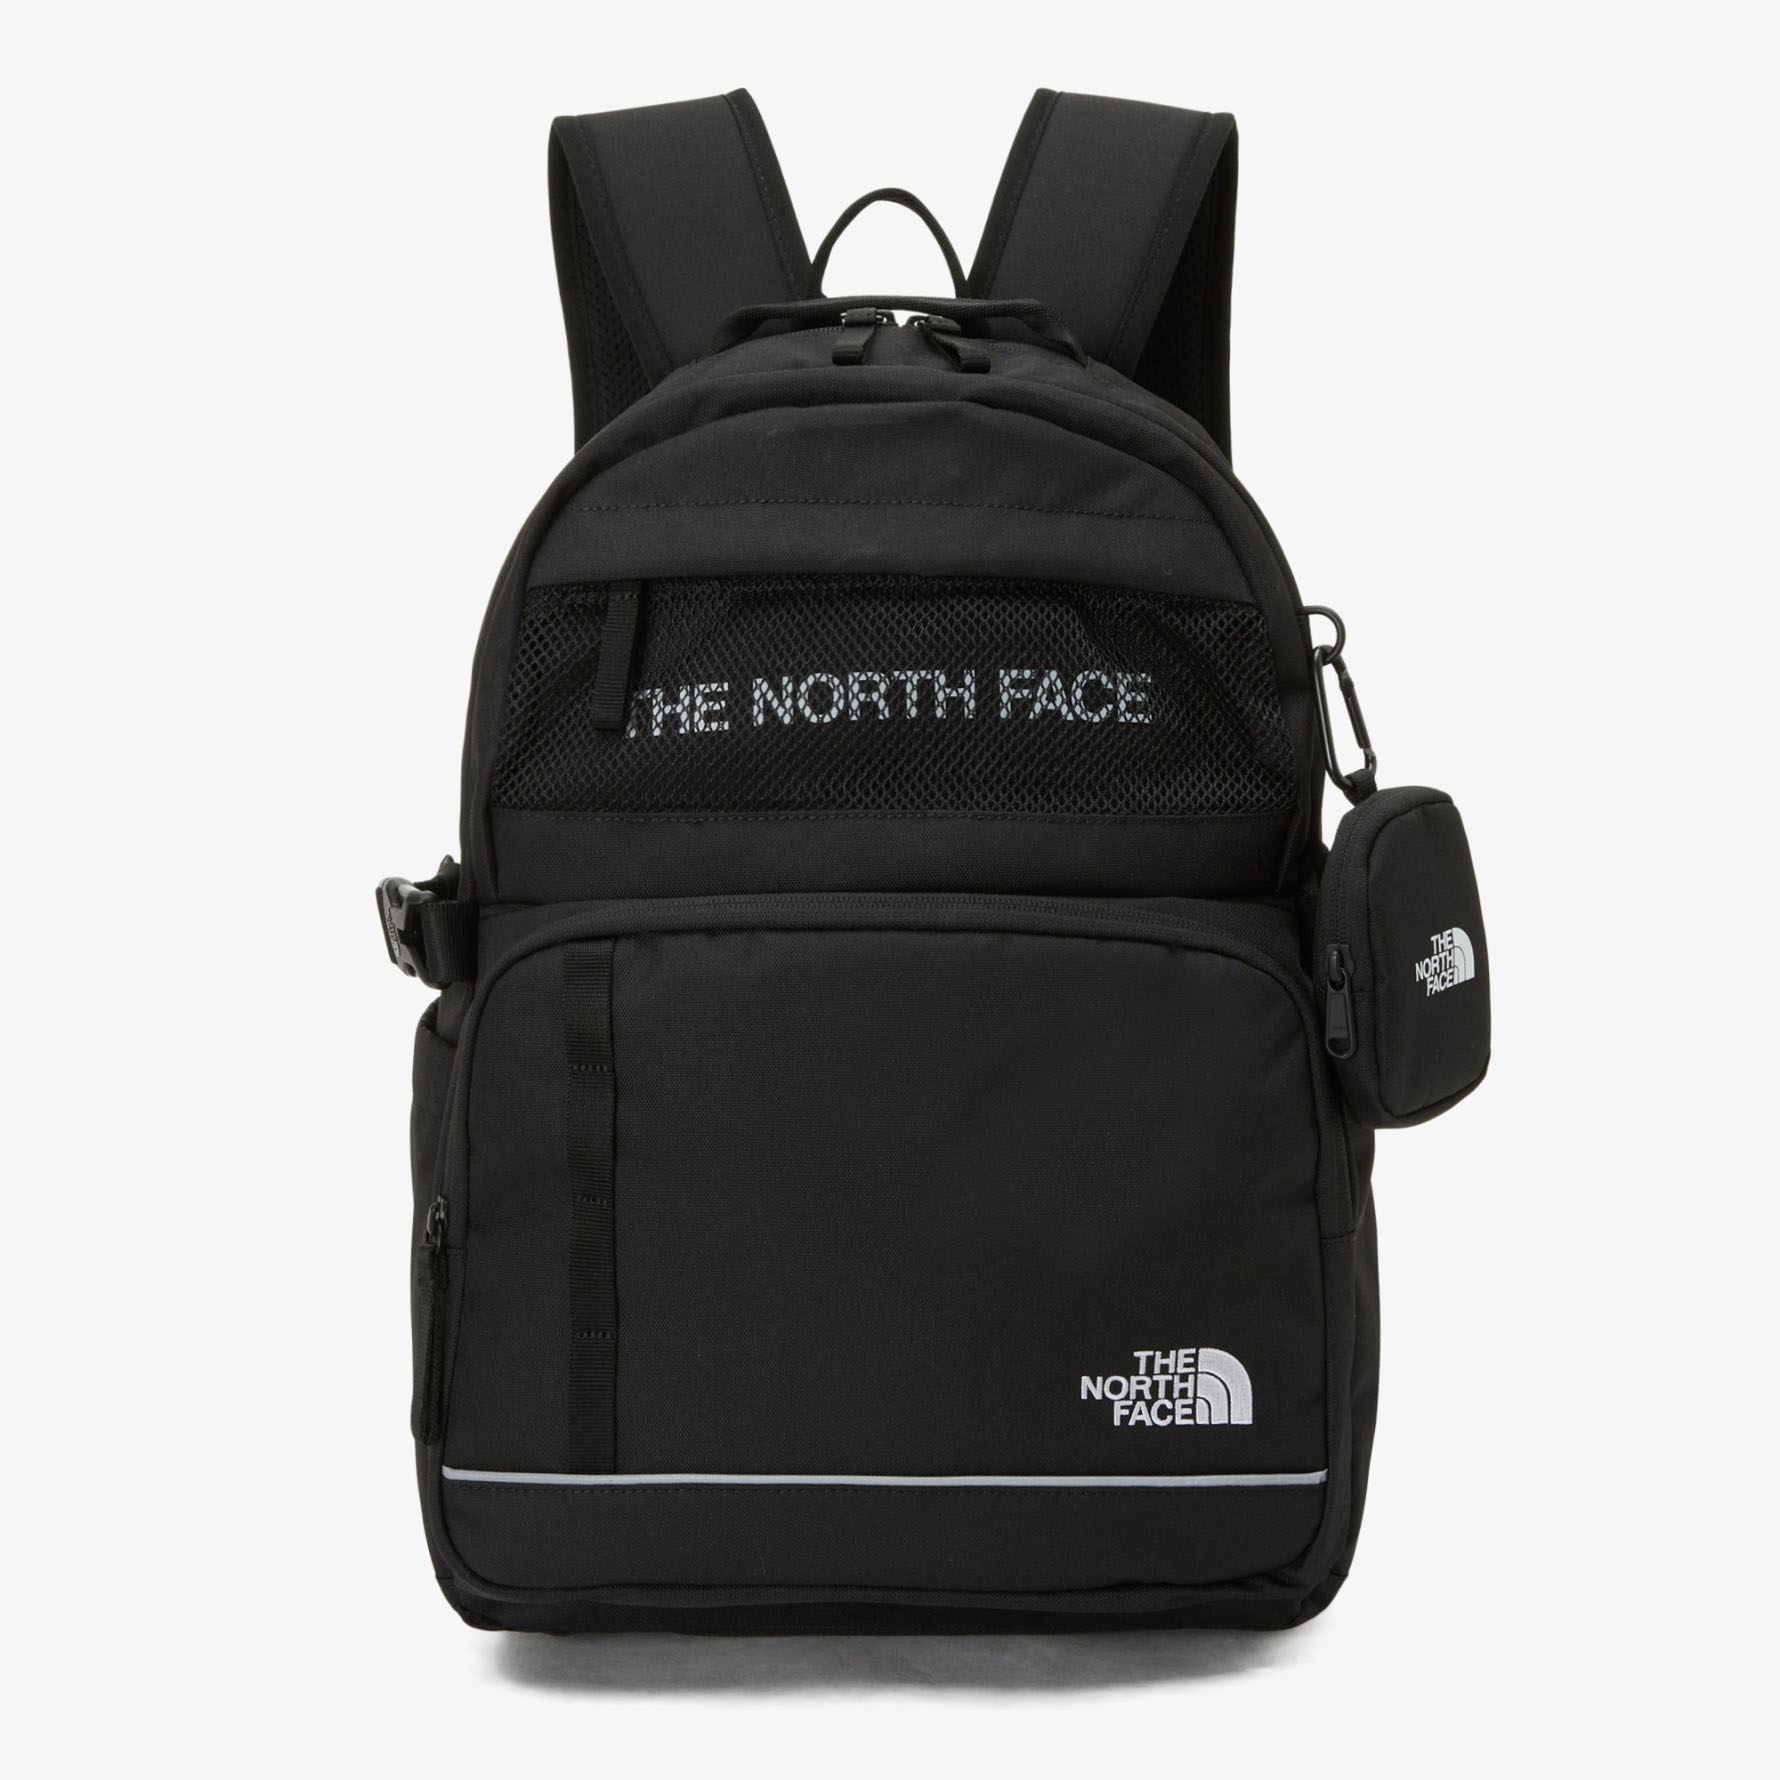 THE NORTH FACE キッズ ノースフェイス リュックサック Jr. SCHOOL PACK スクールバッグ 18リットル バックパック  リュック CREAM BLACK キッズ用 NM2DP50S/R